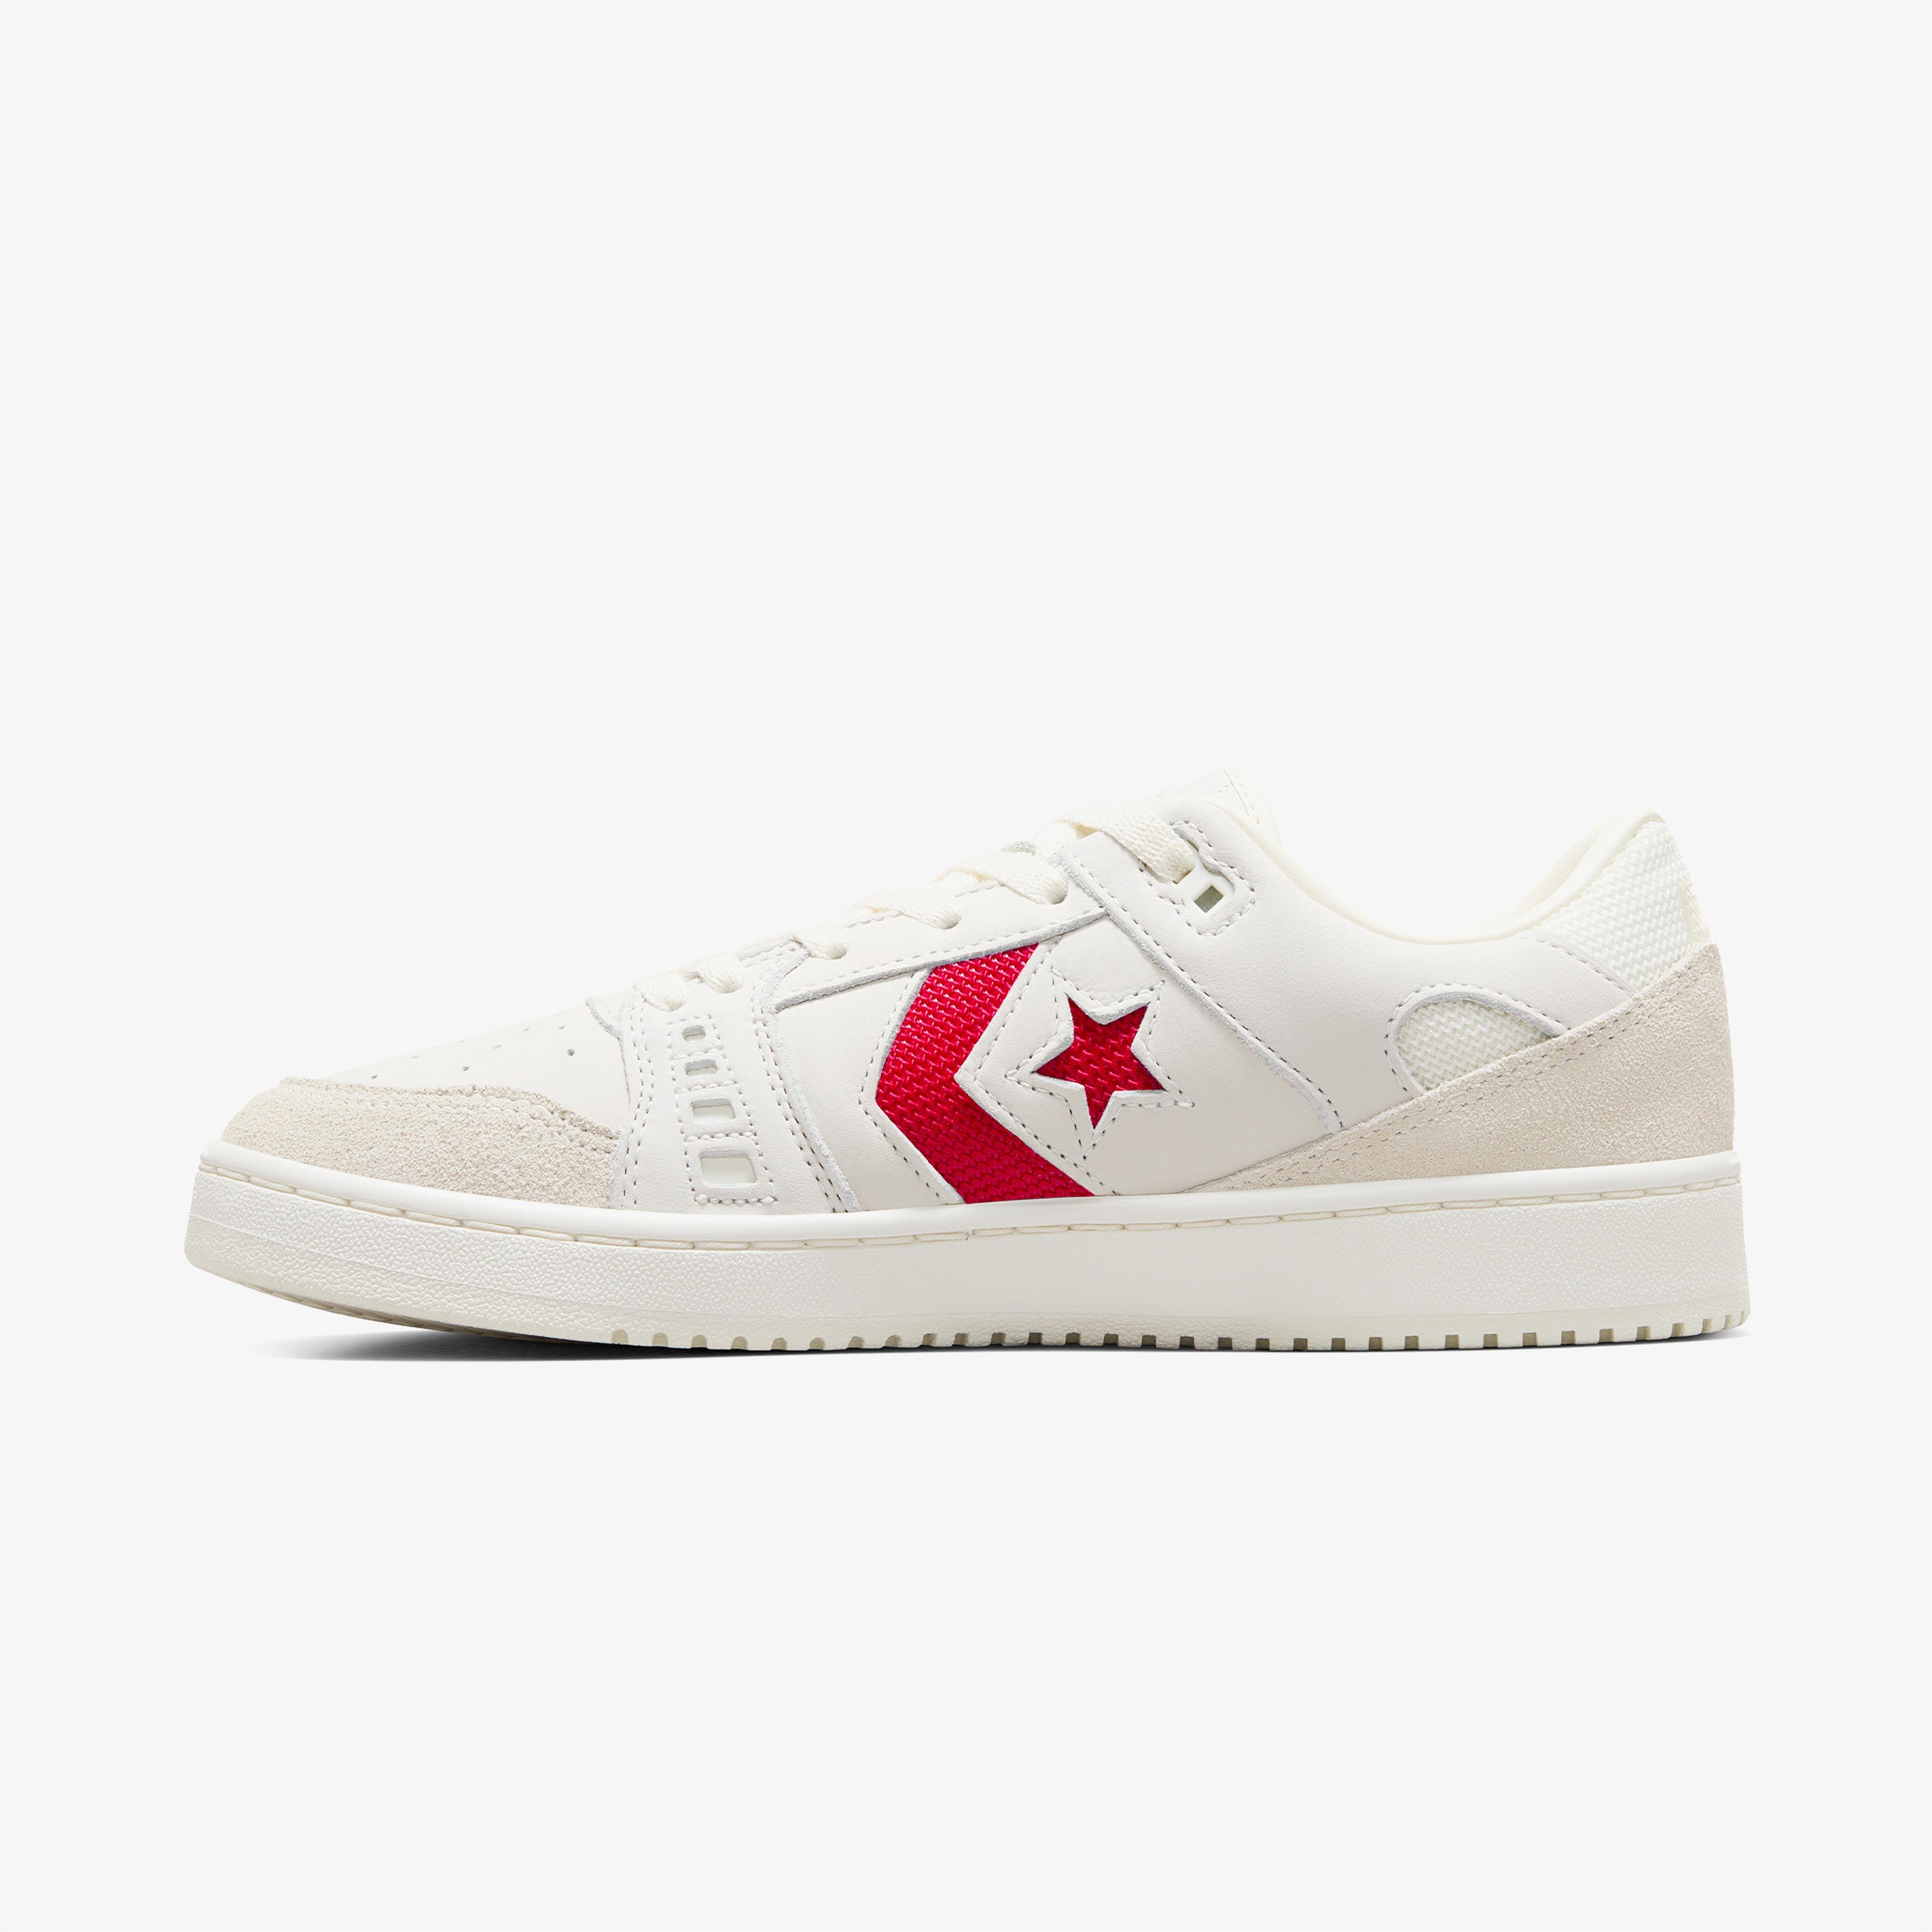 Converse As-1 Pro Erkek Krem/Lacivert/Kırmızı Sneaker